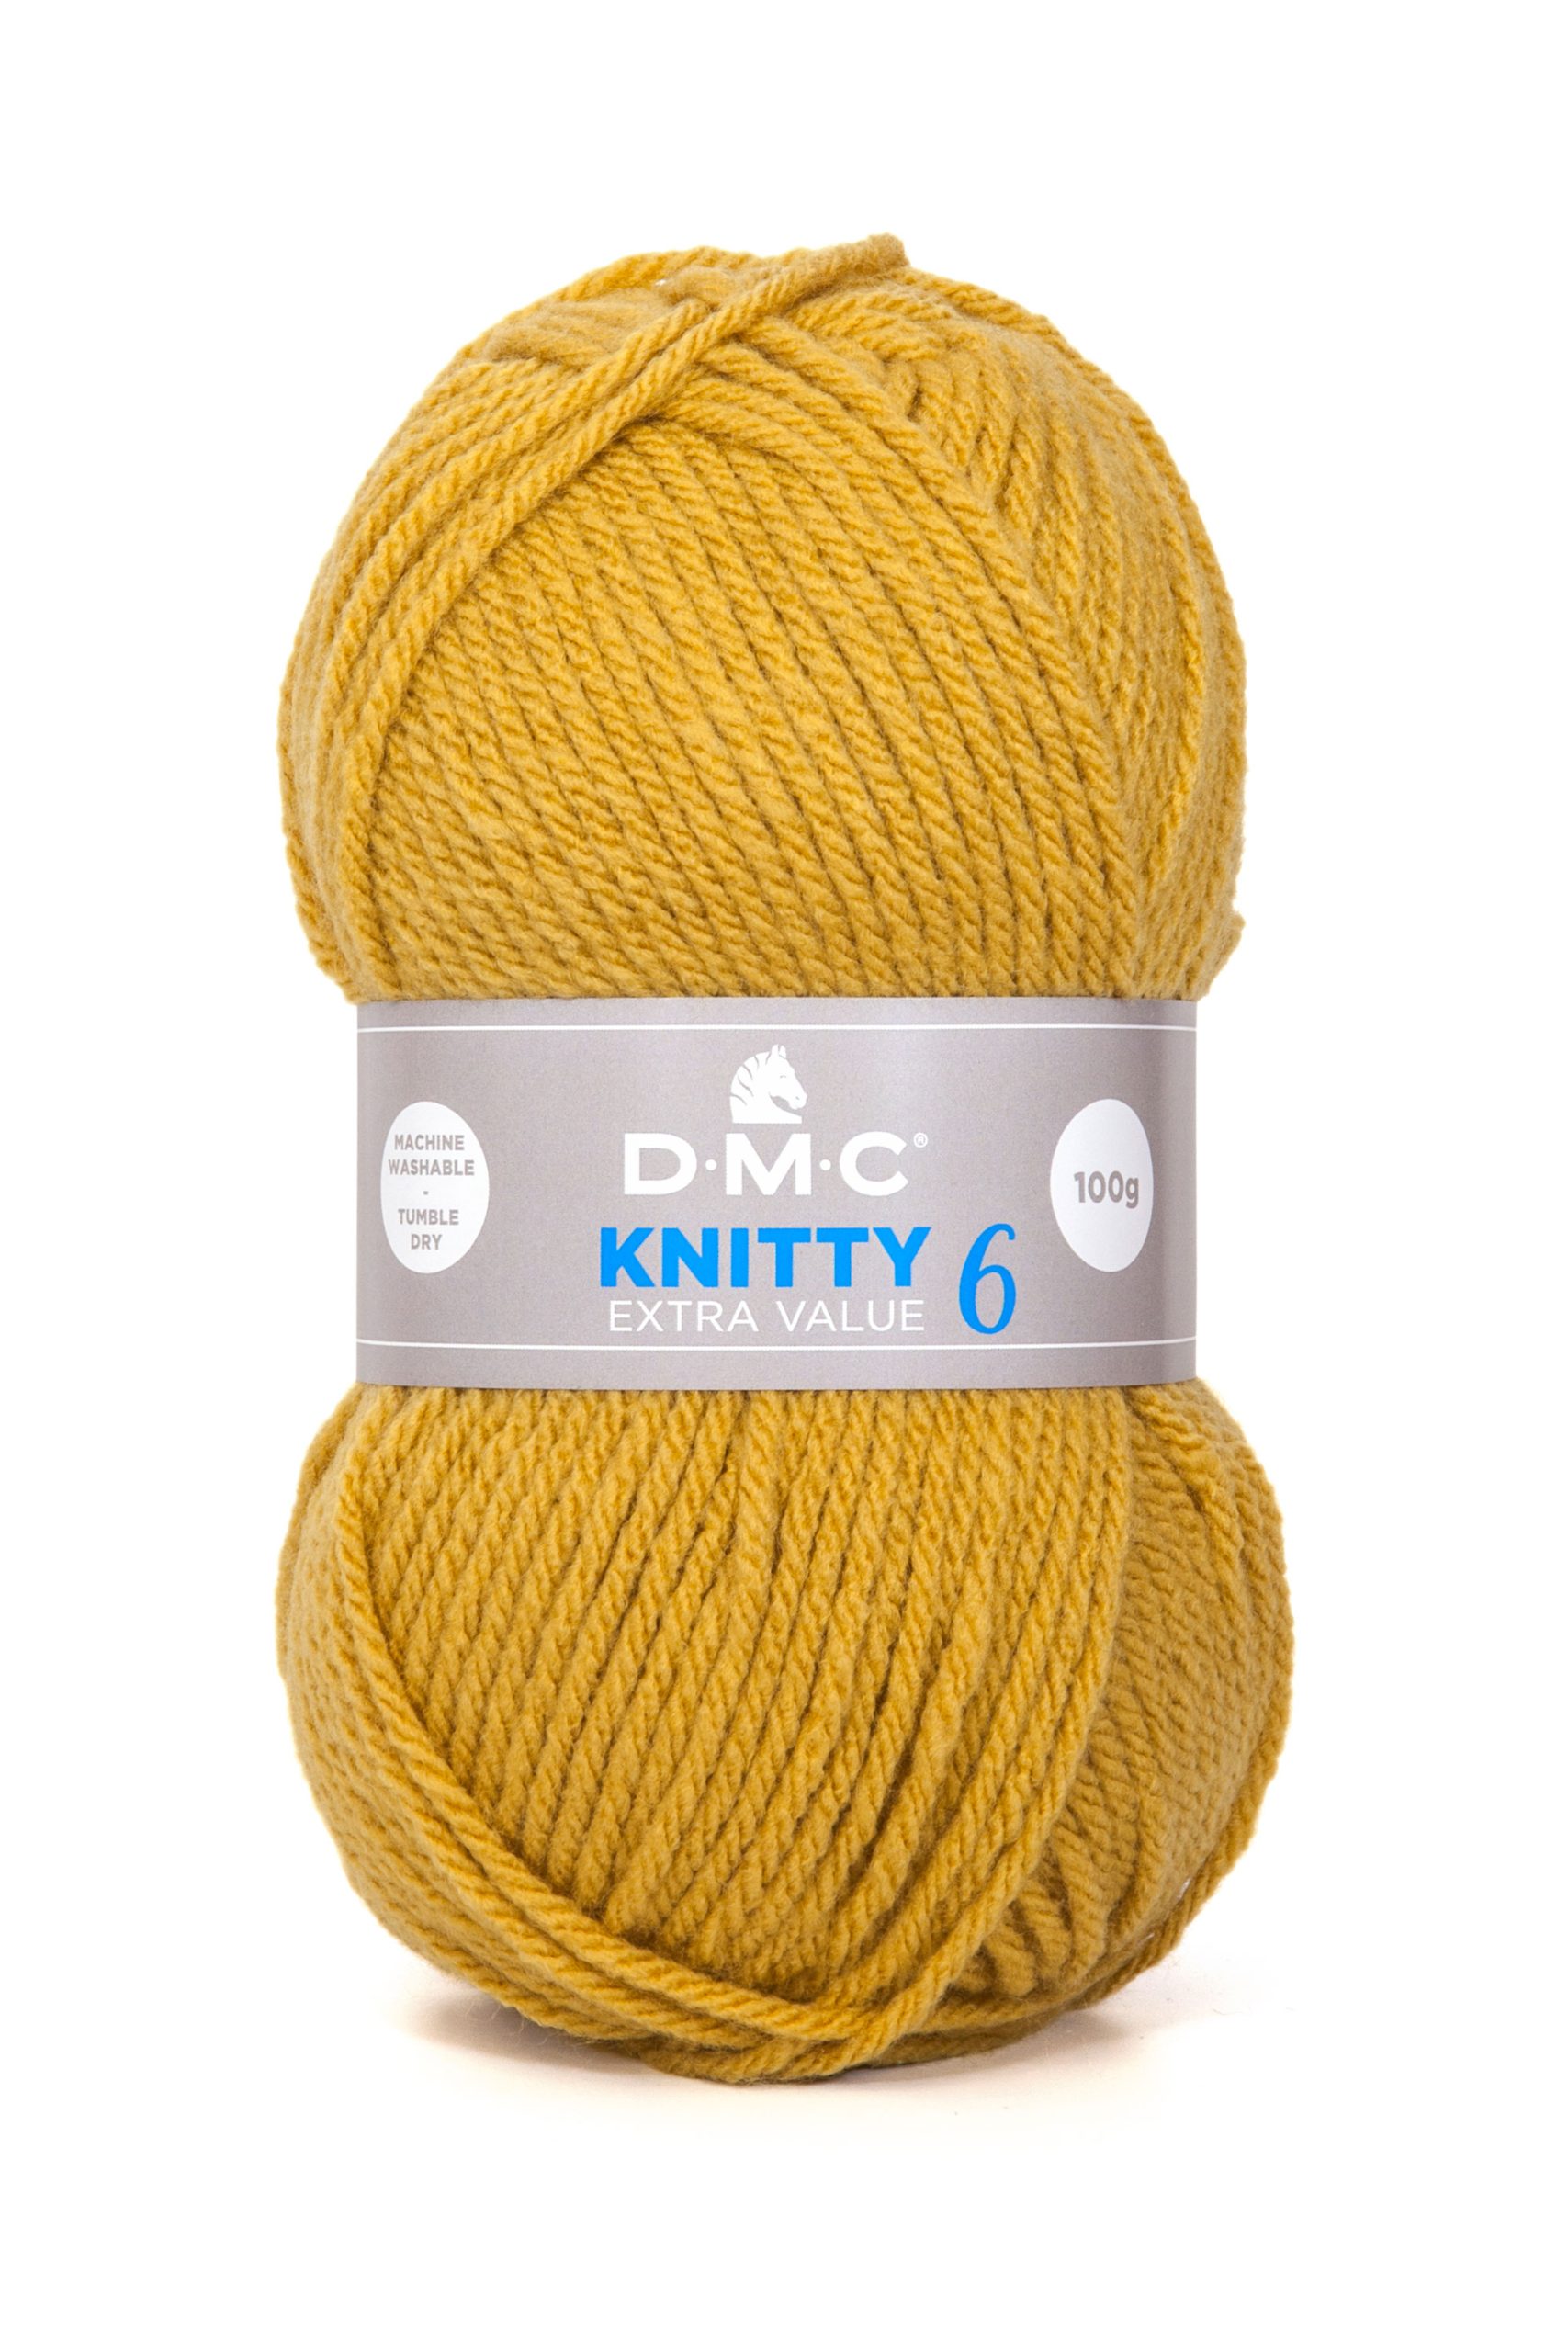 Lana Dmc Knitty 6 Colore 670